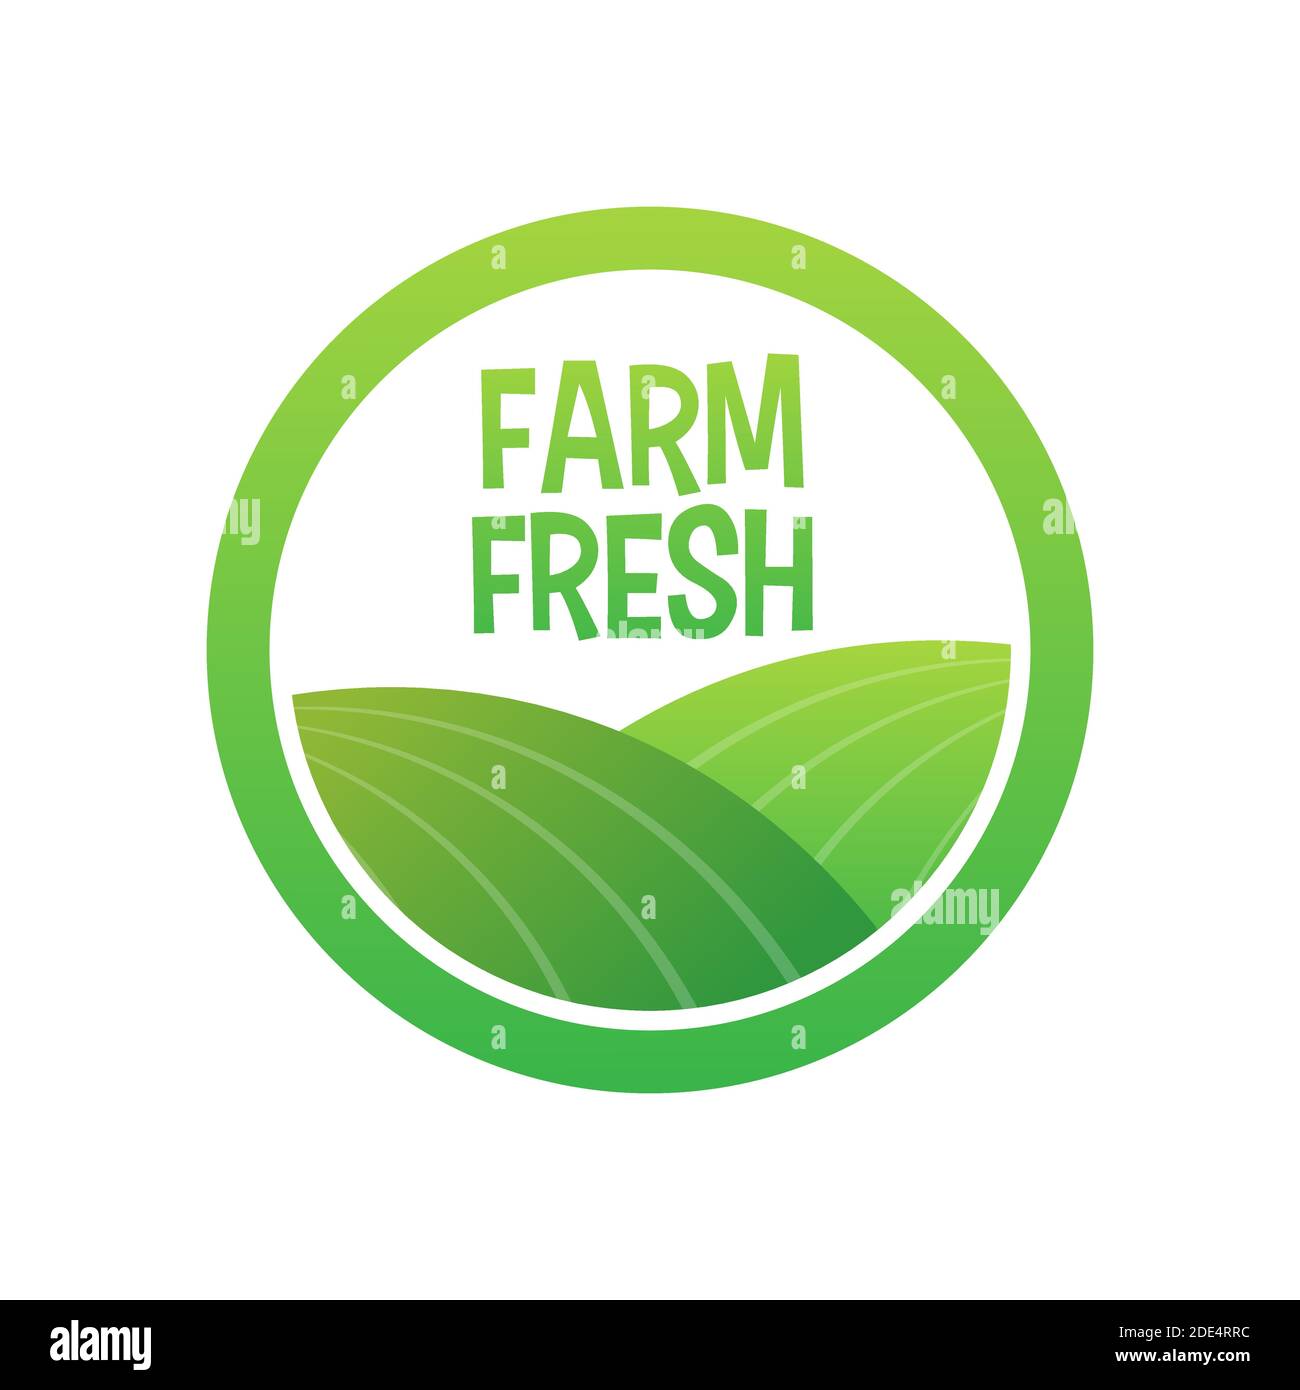 Farm Fresh icon, label on white background. Vector stock illustration. Stock Vector